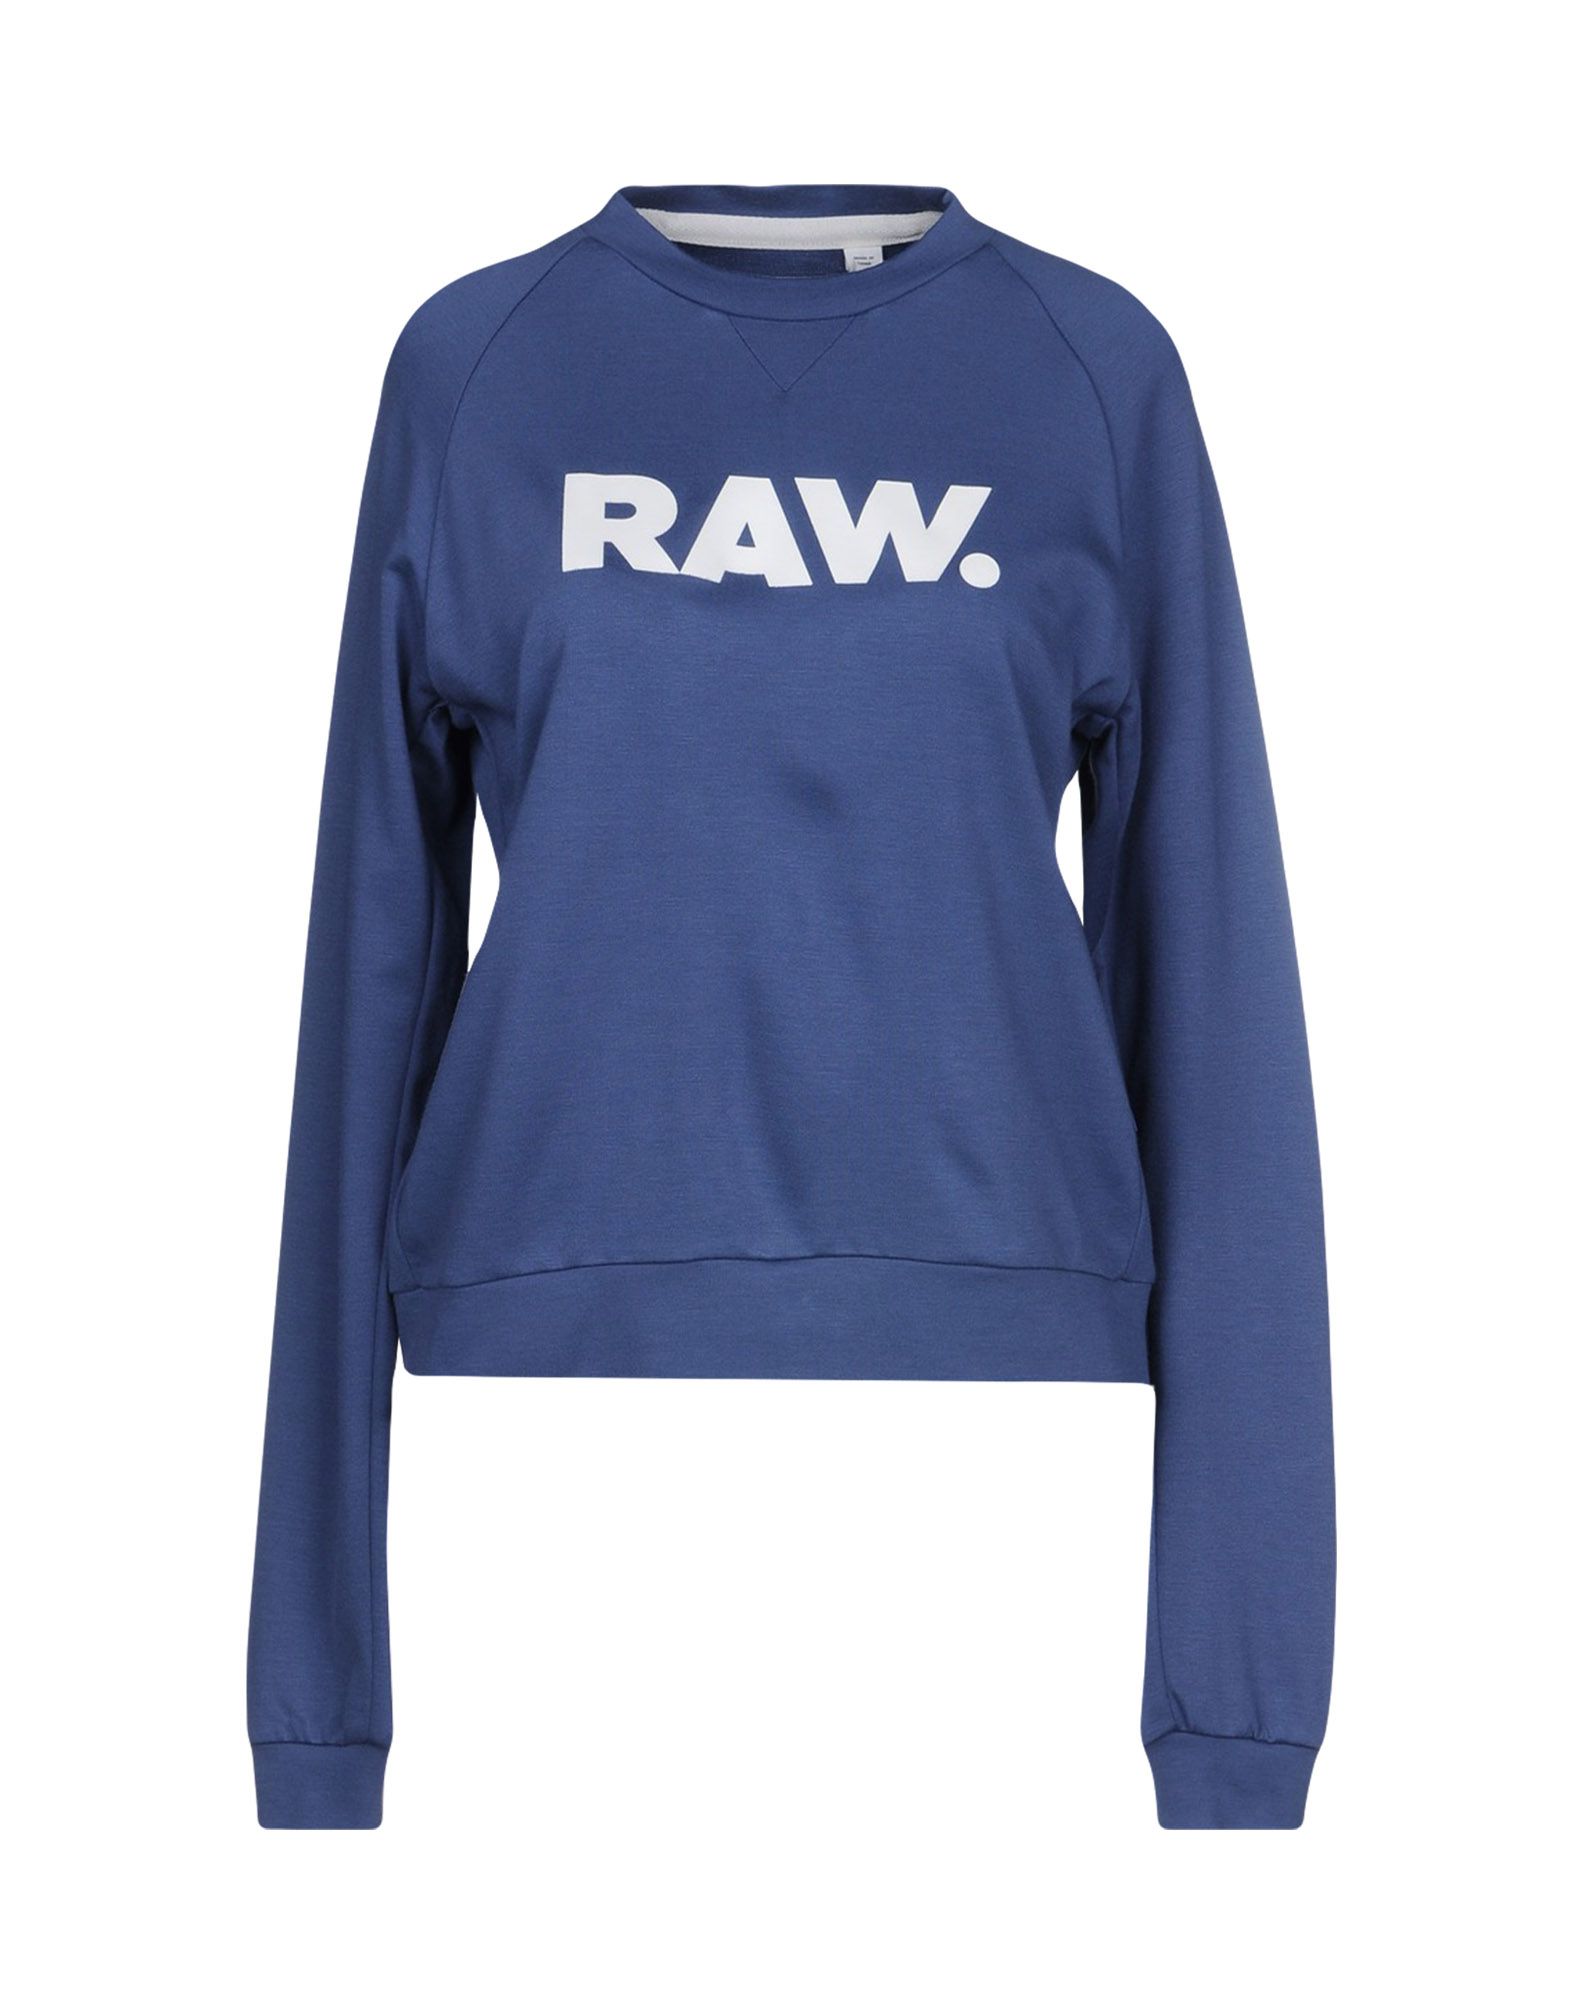 raw sweatshirt